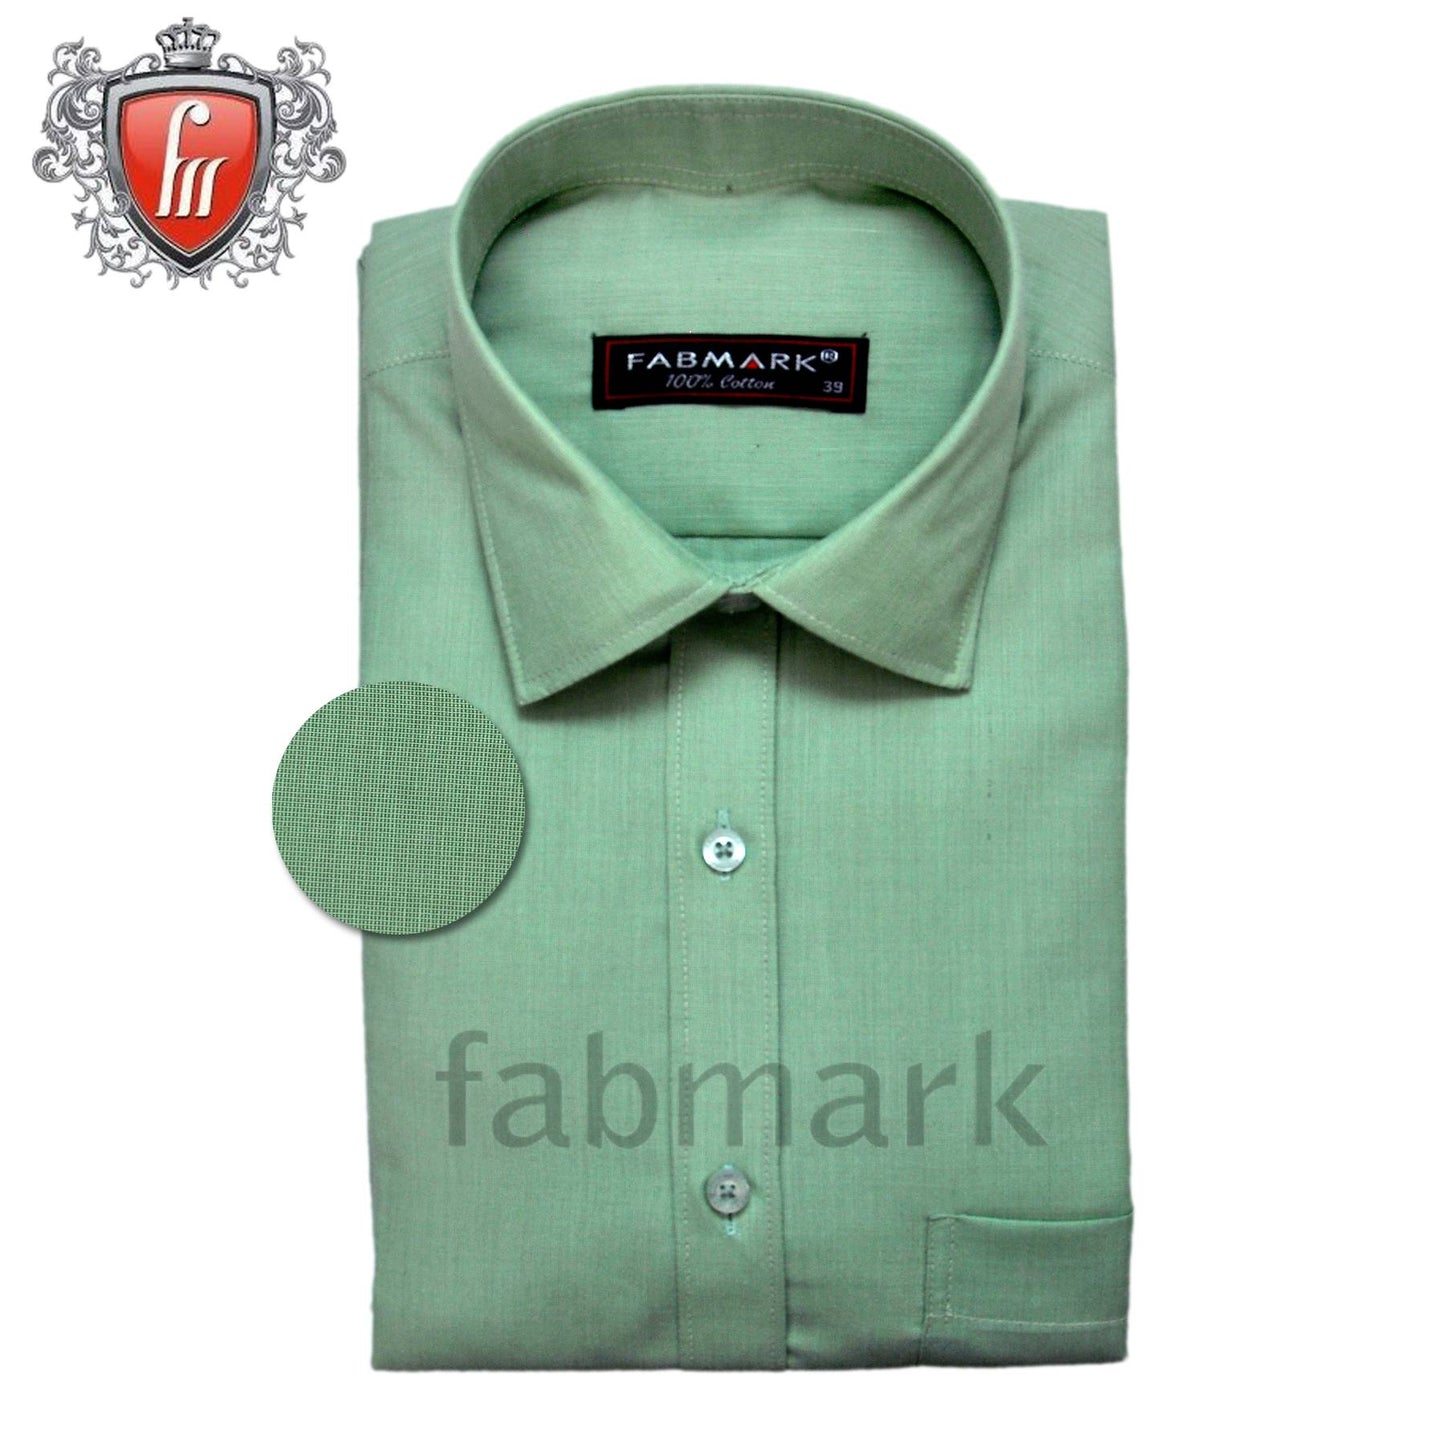 Fabmark Men's Formal Cotton Shirt Green